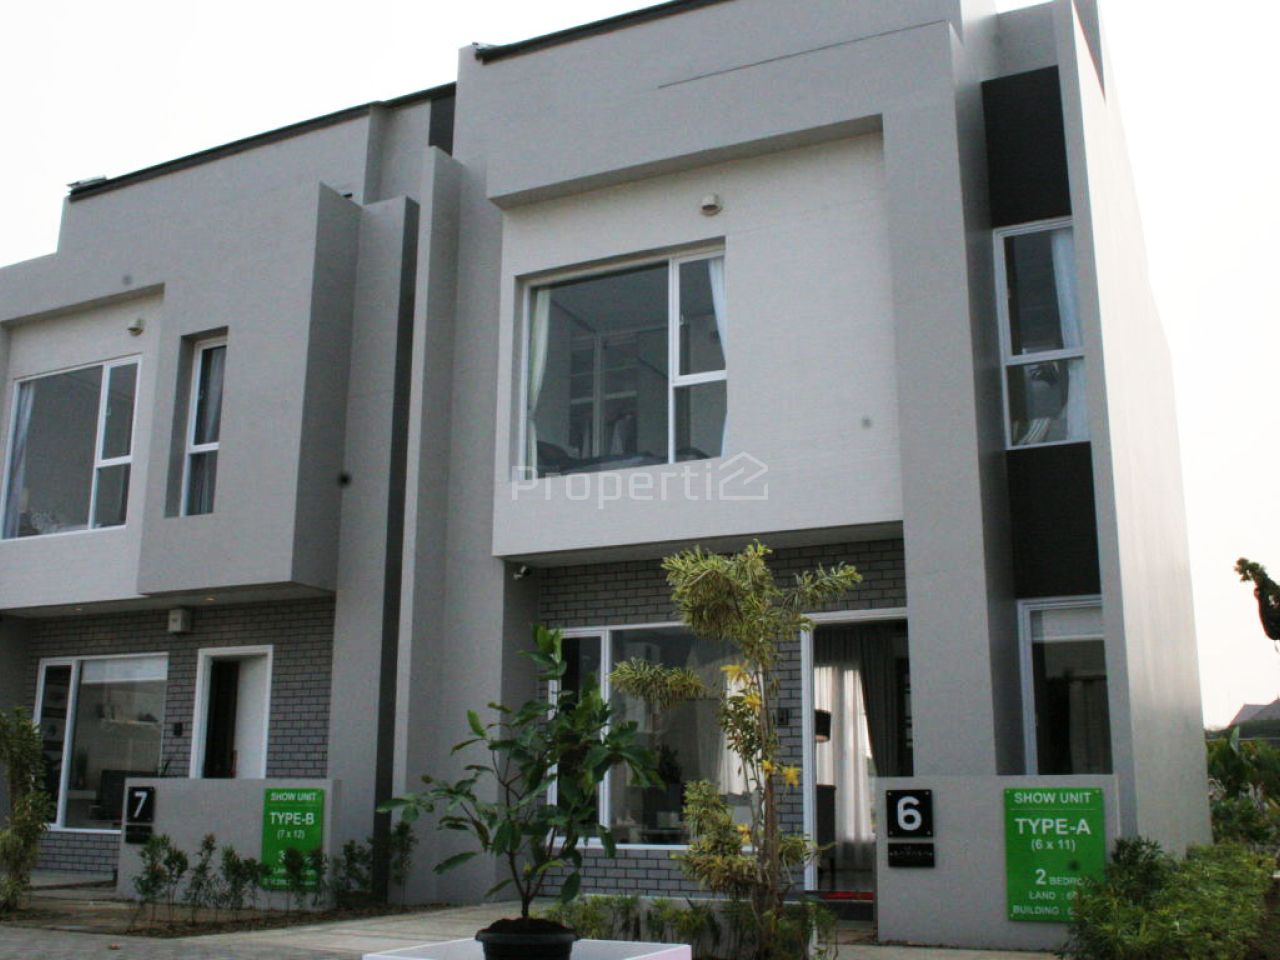 Rumah Modern Savasa di Kota Deltamas, Jawa Barat